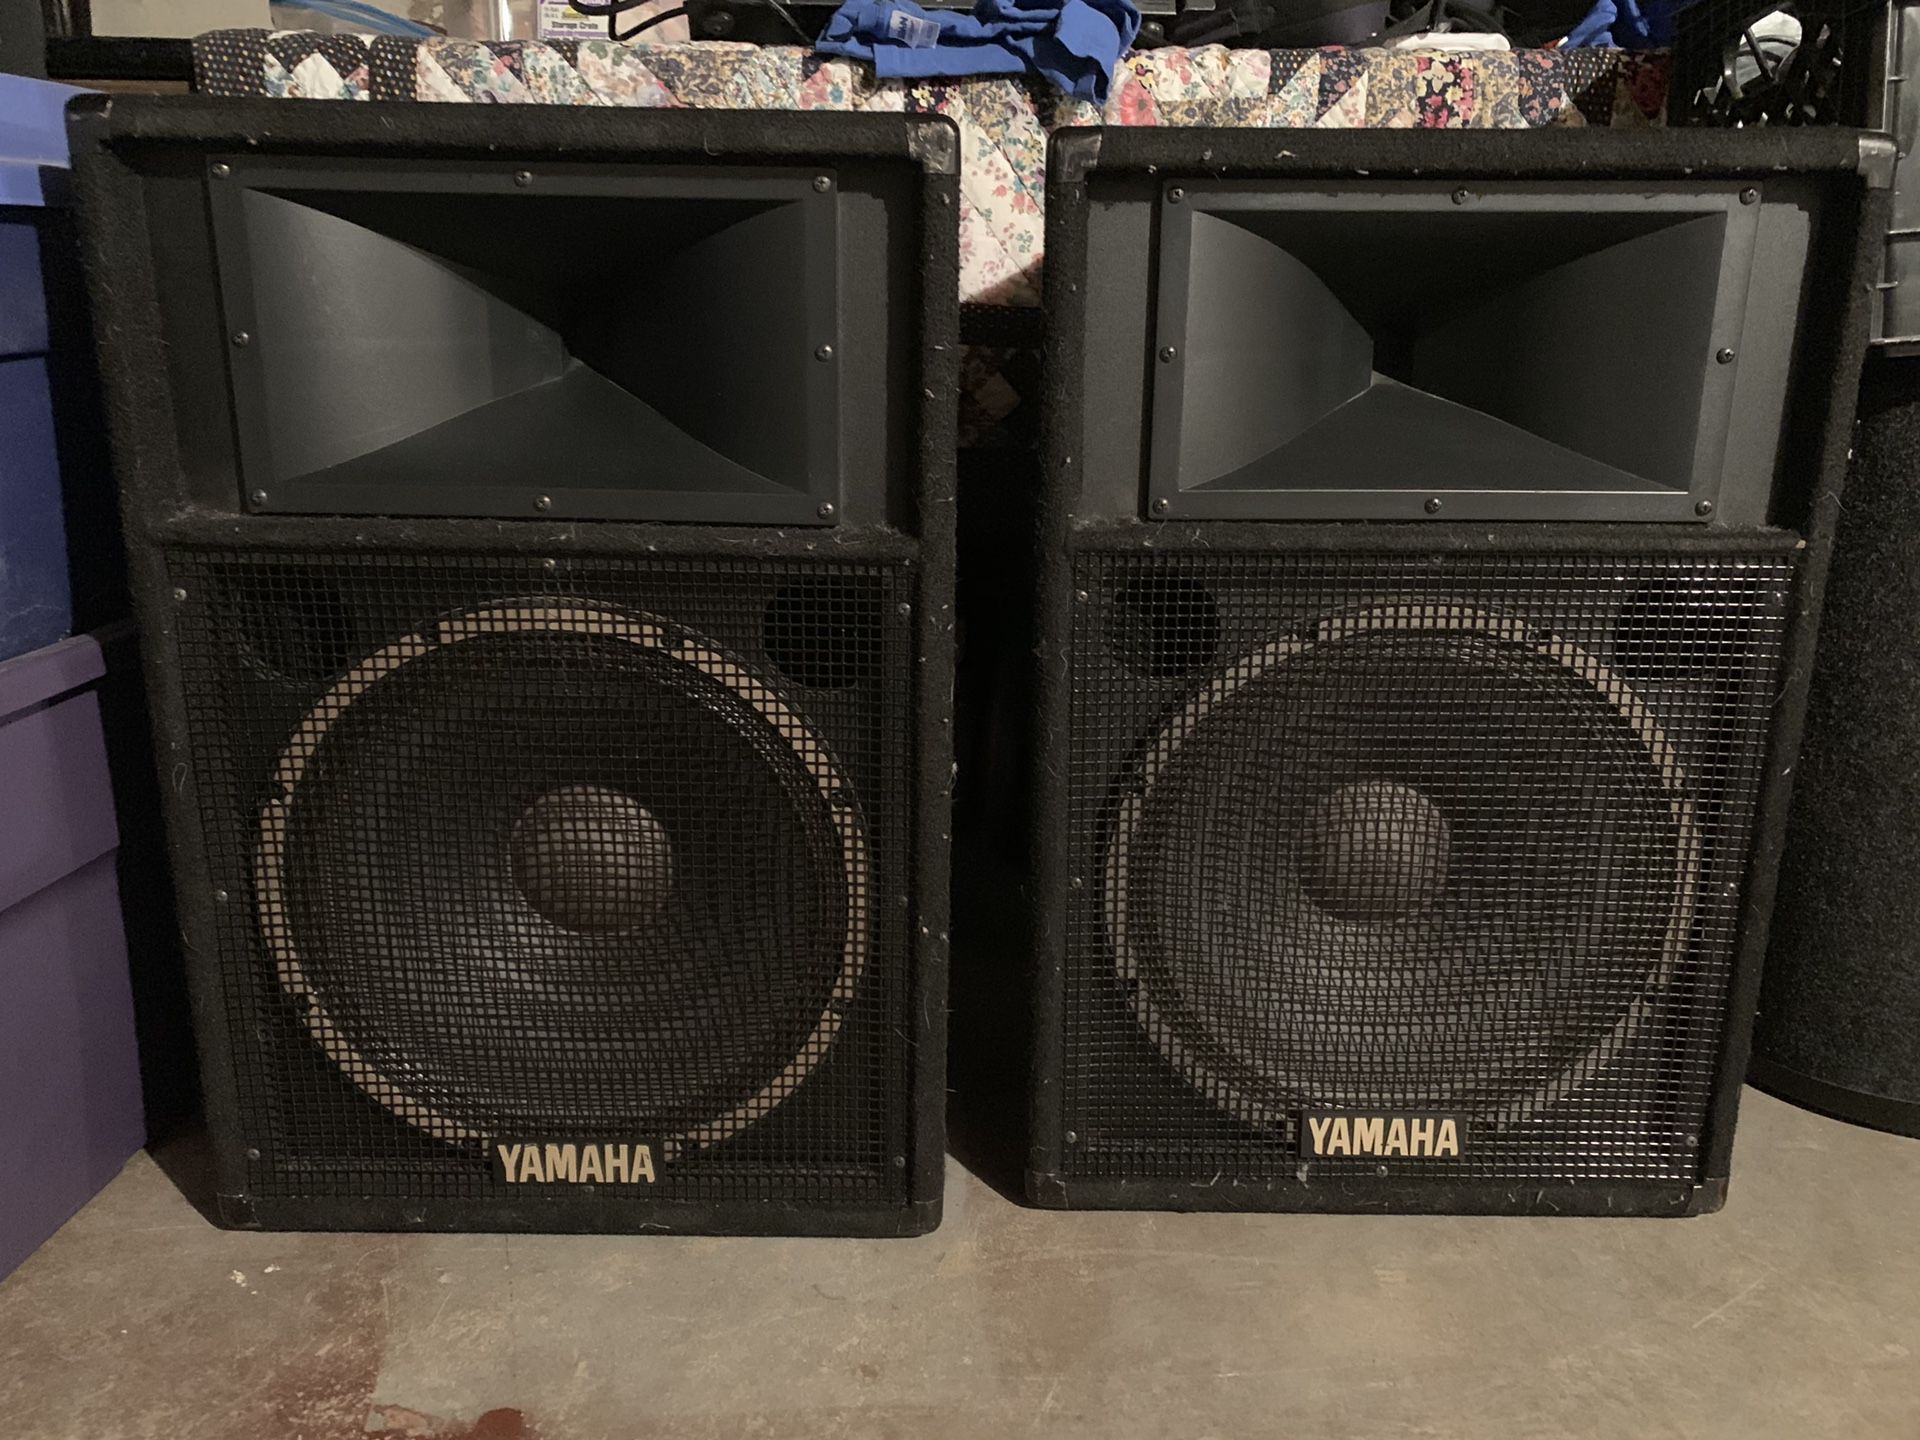 Yamaha DJ speakers